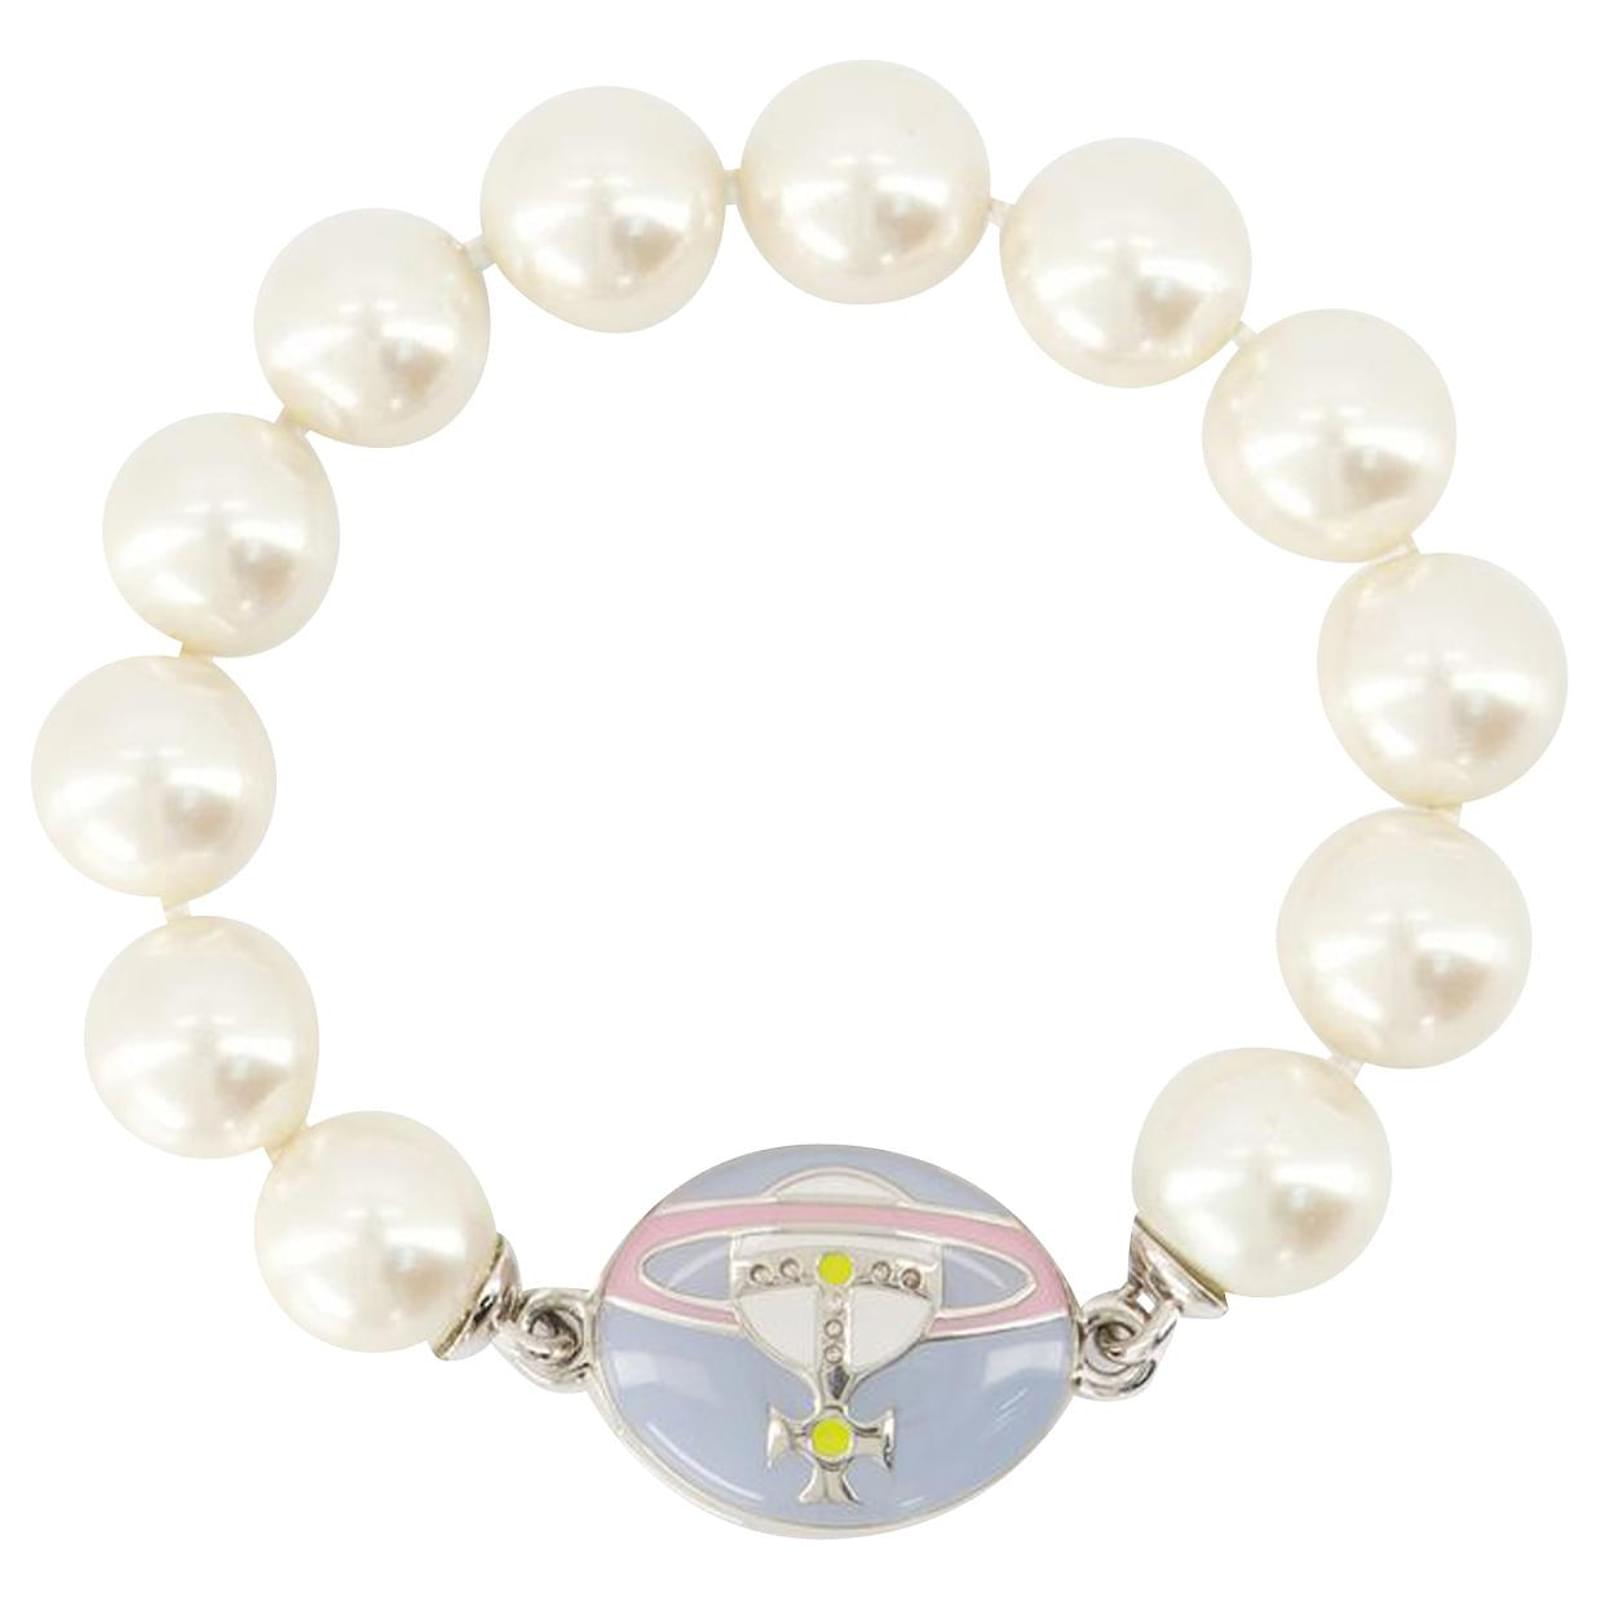 Loelia Large Pearl Bracelet - Vivienne Westwood - Brass - Silver